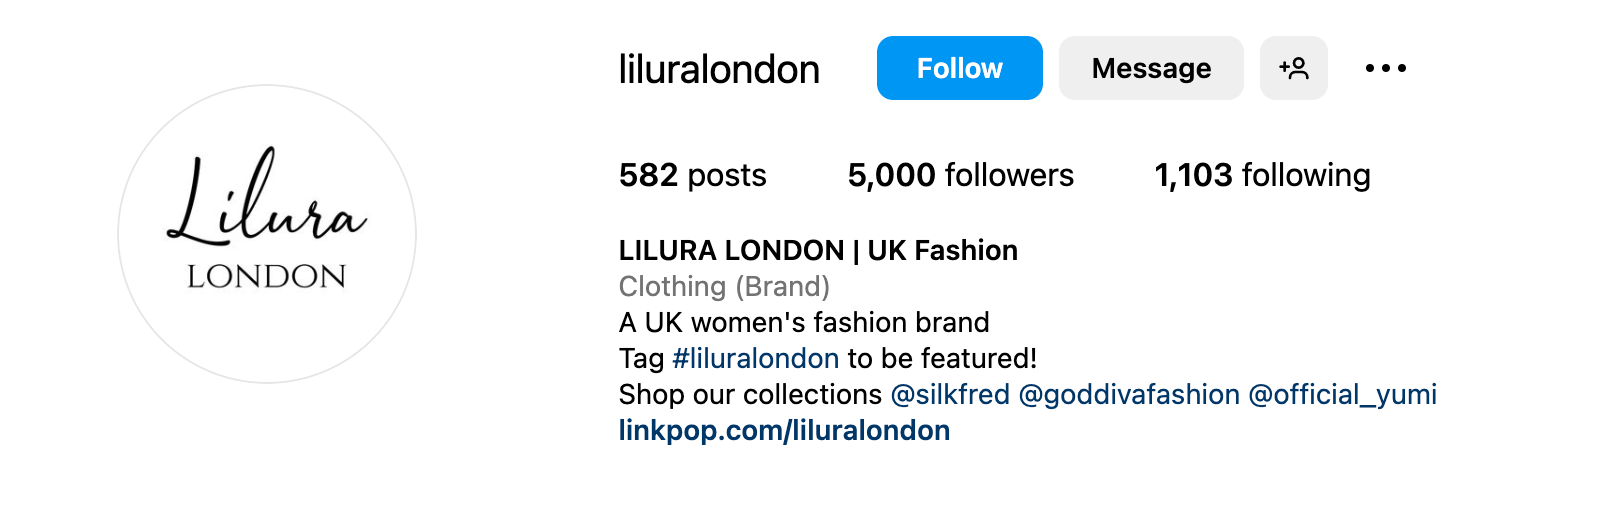 Instagram bio ideas - Lilura london